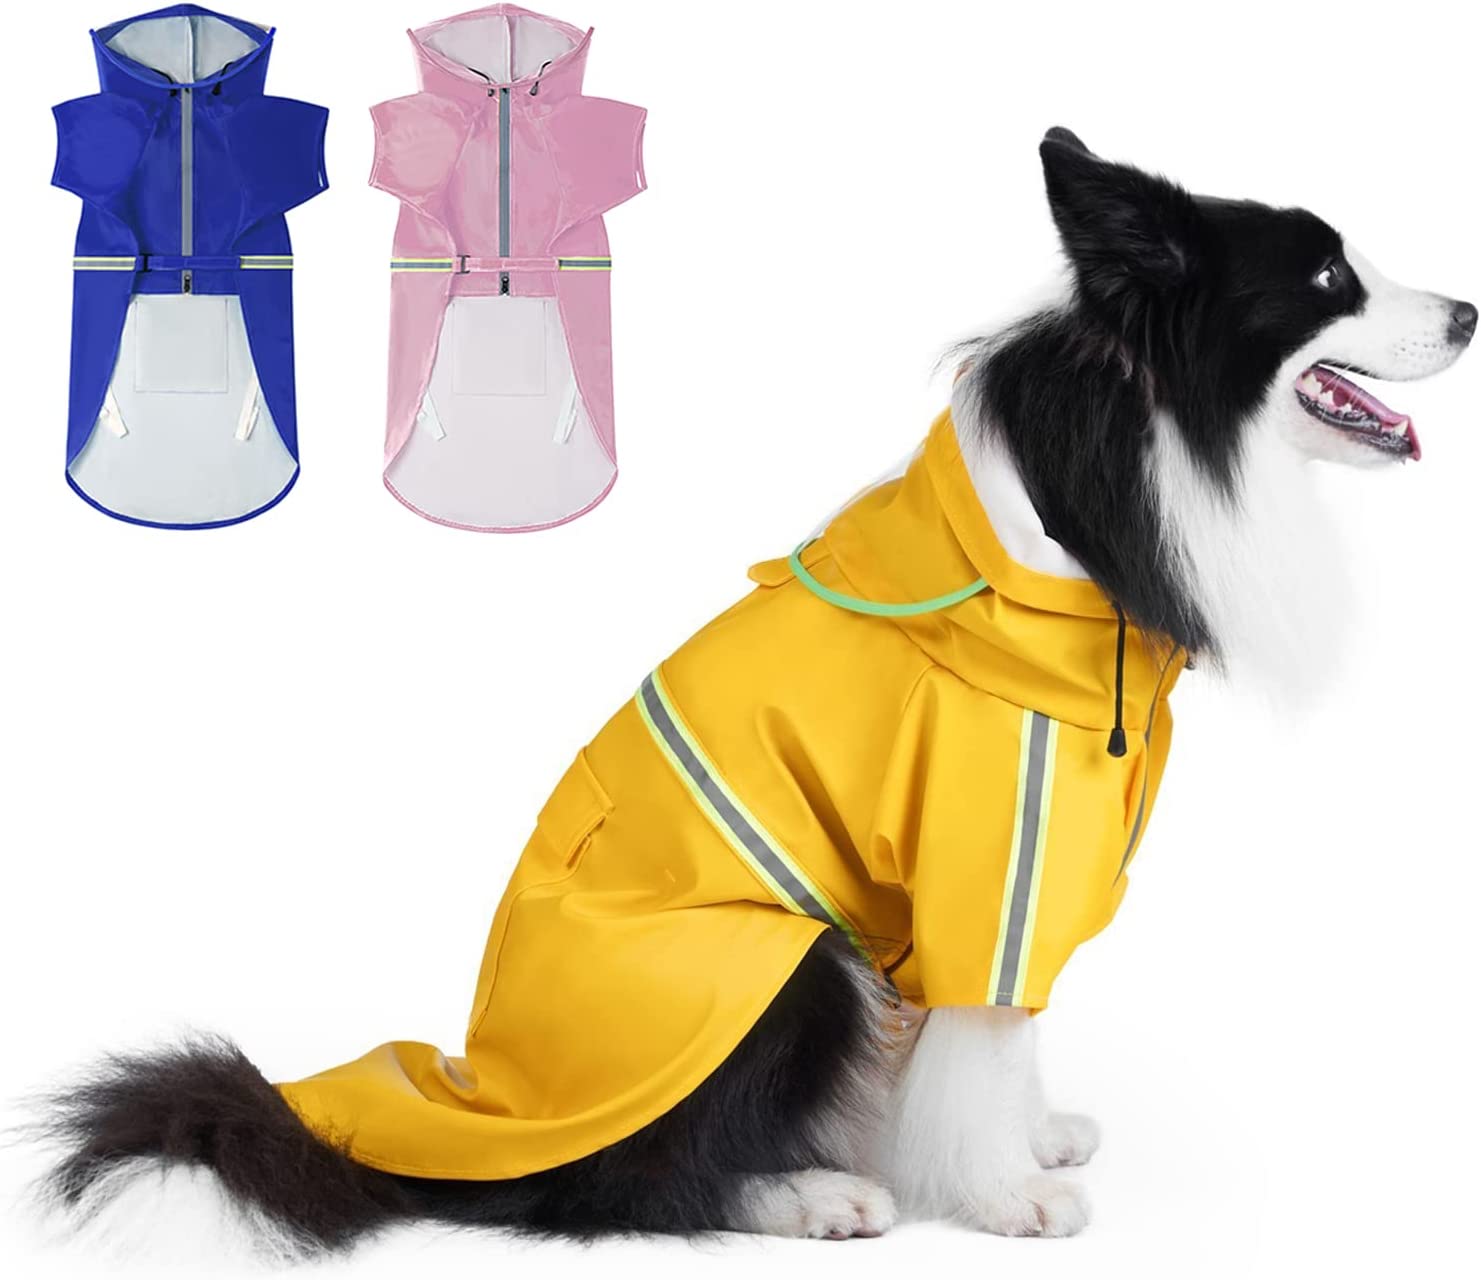 Large Dog Raincoat, Dog Rain Jacket with Reflective Strip & Leash Hole, Waterproof Adjustable Pet Rain Poncho Jacket with Hood, Slicker for Medium Large Dogs (4XL, Yellow)